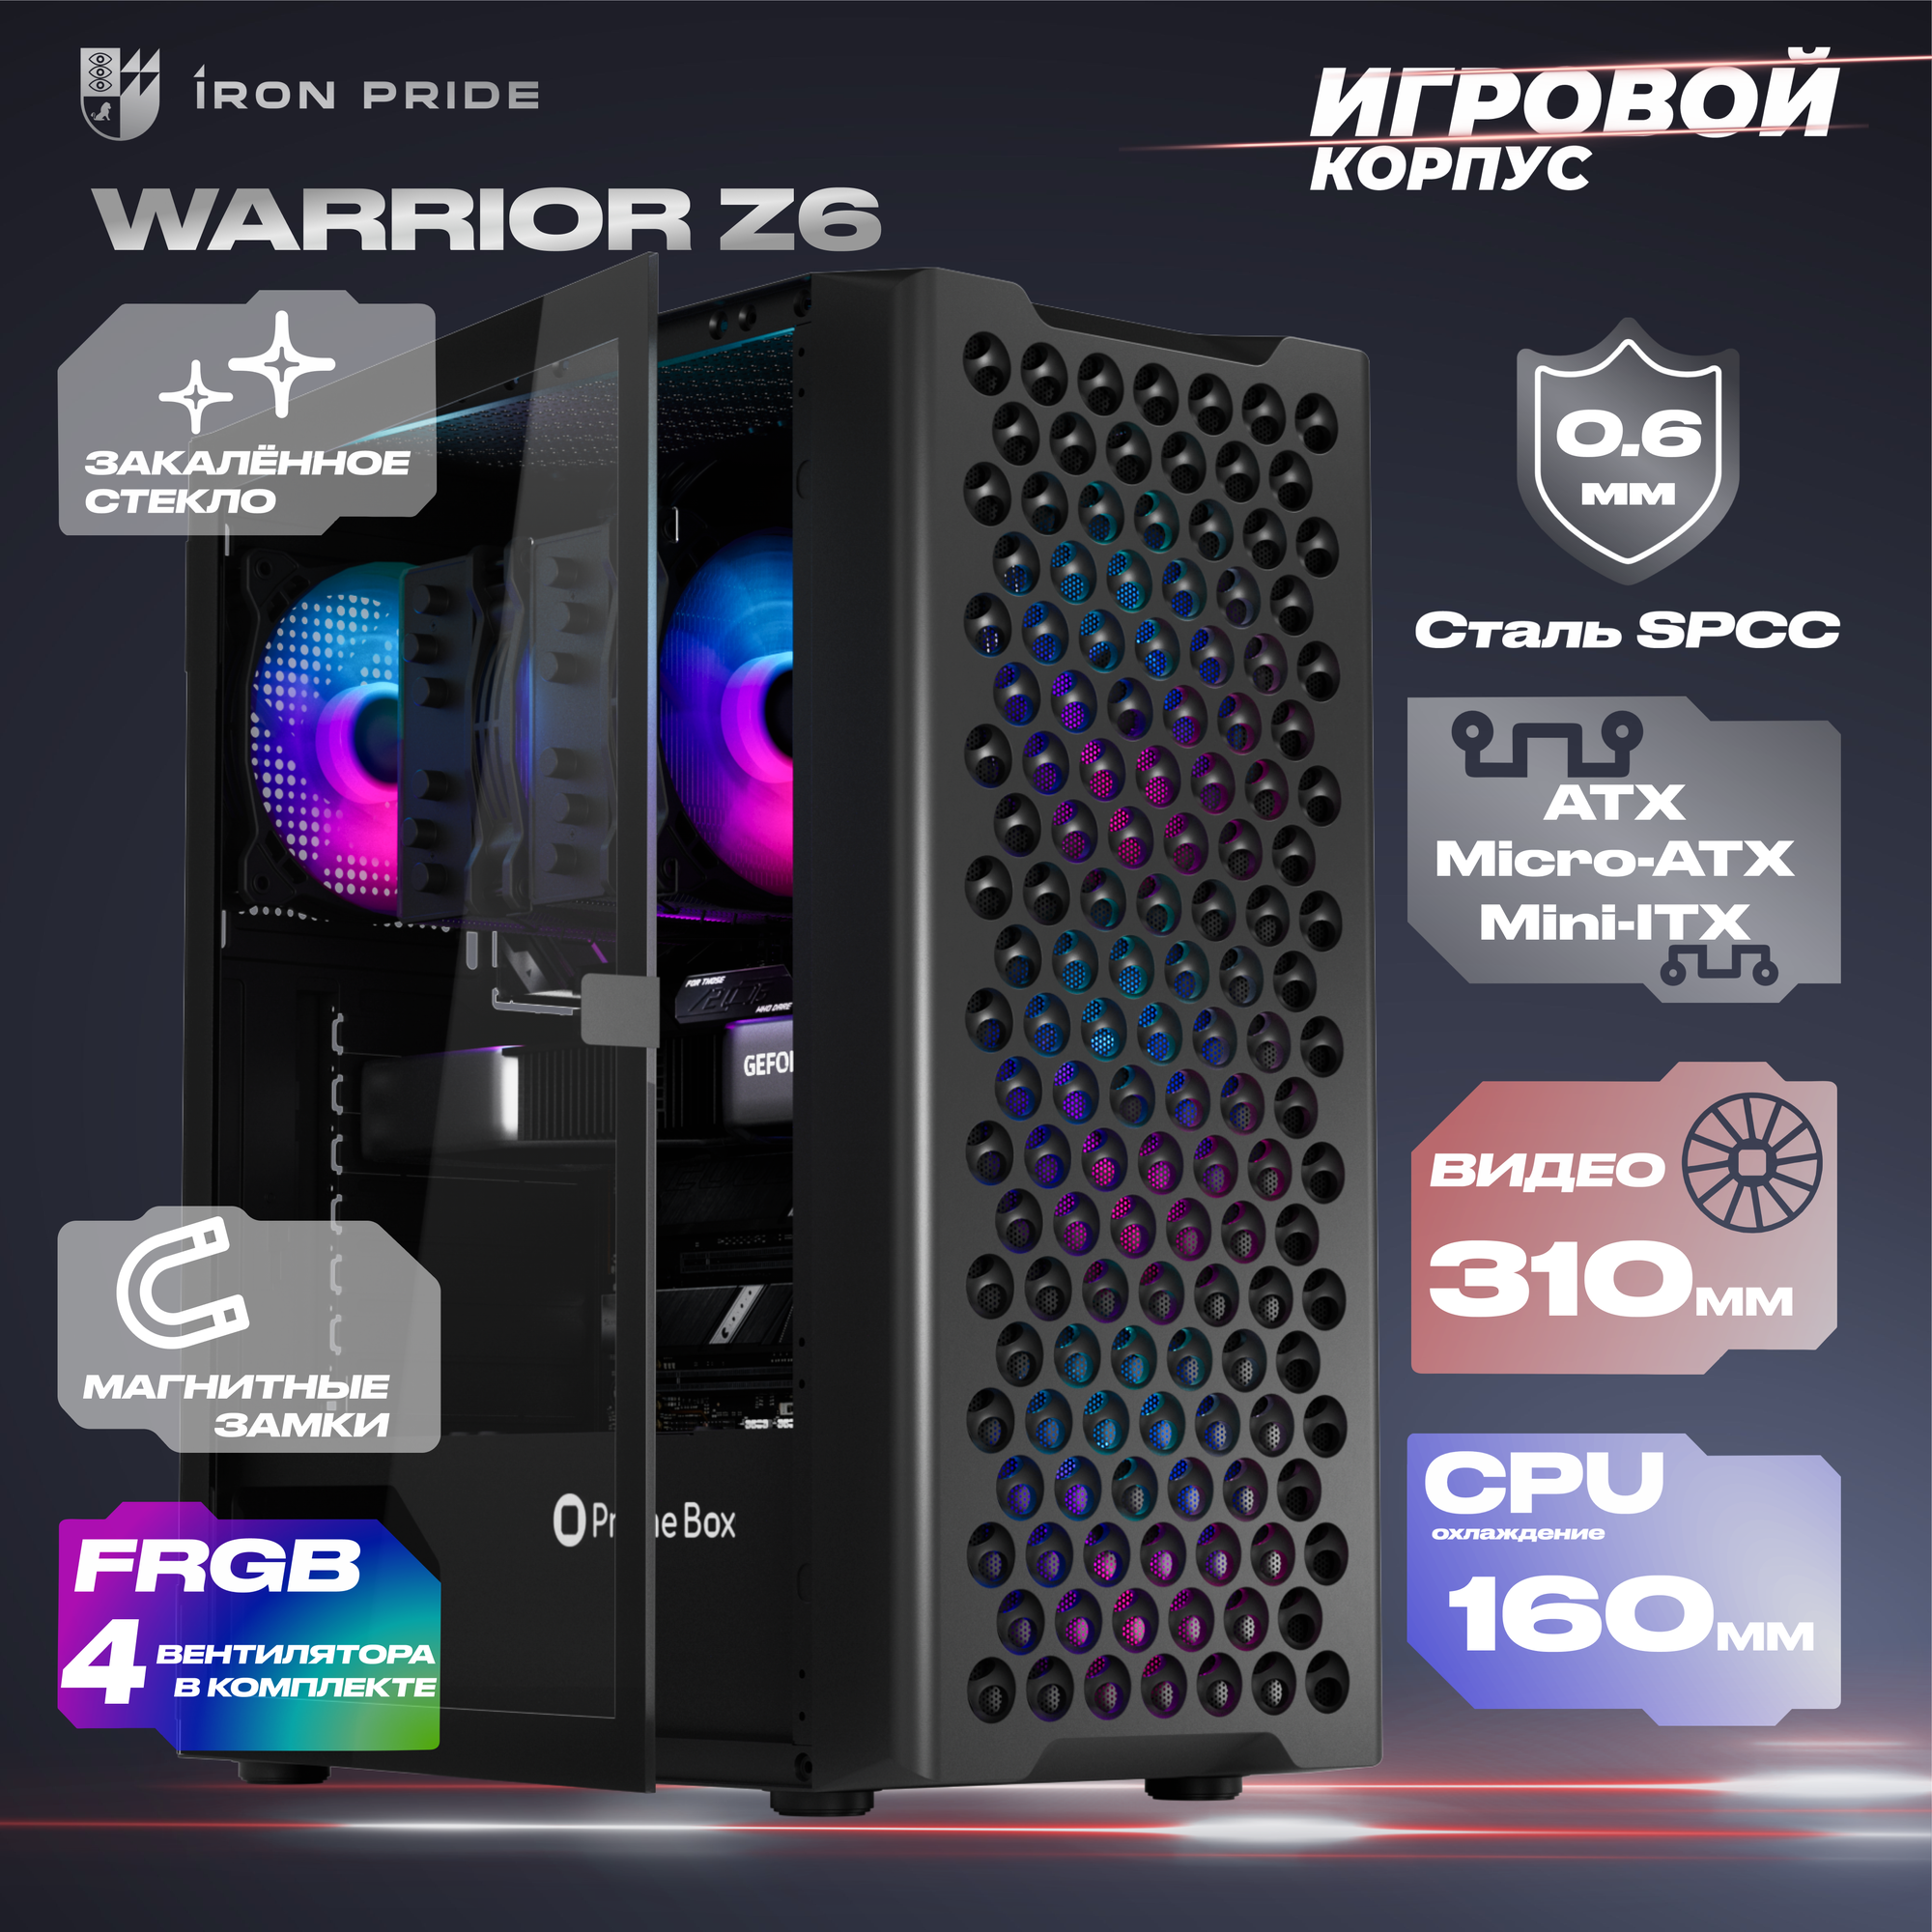 Игровой корпус для компьютера Iron Pride Warrior Z6 + 4 FRGB вентилятора + закаленное стекло, ATX, Micro-ATX, Mini-ITX